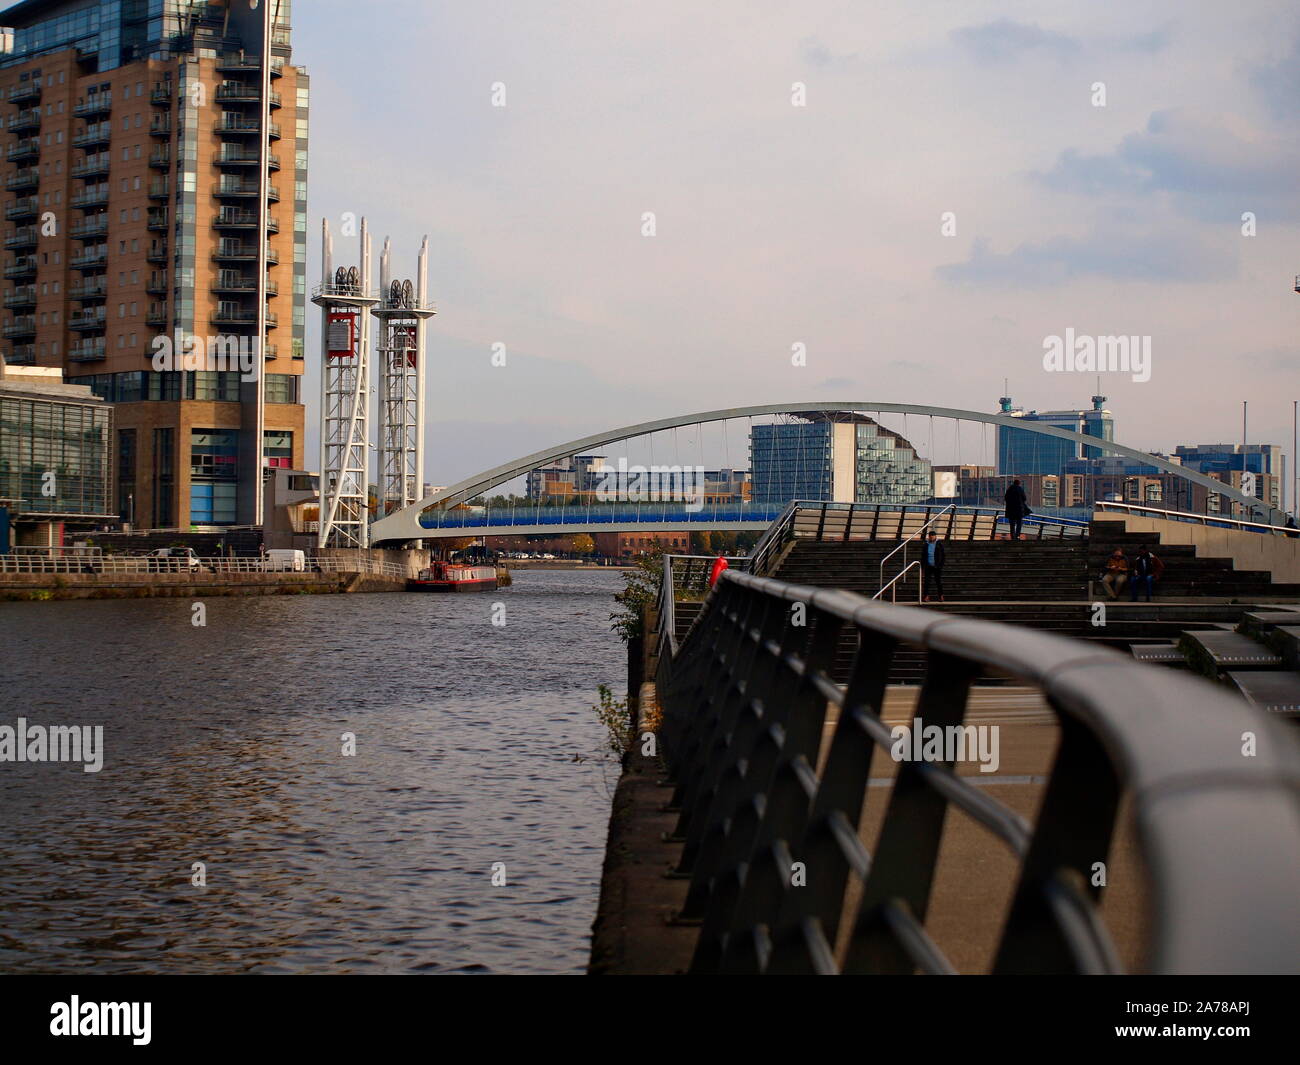 Salford docks, media city, salford, Manchester. Stock Photo